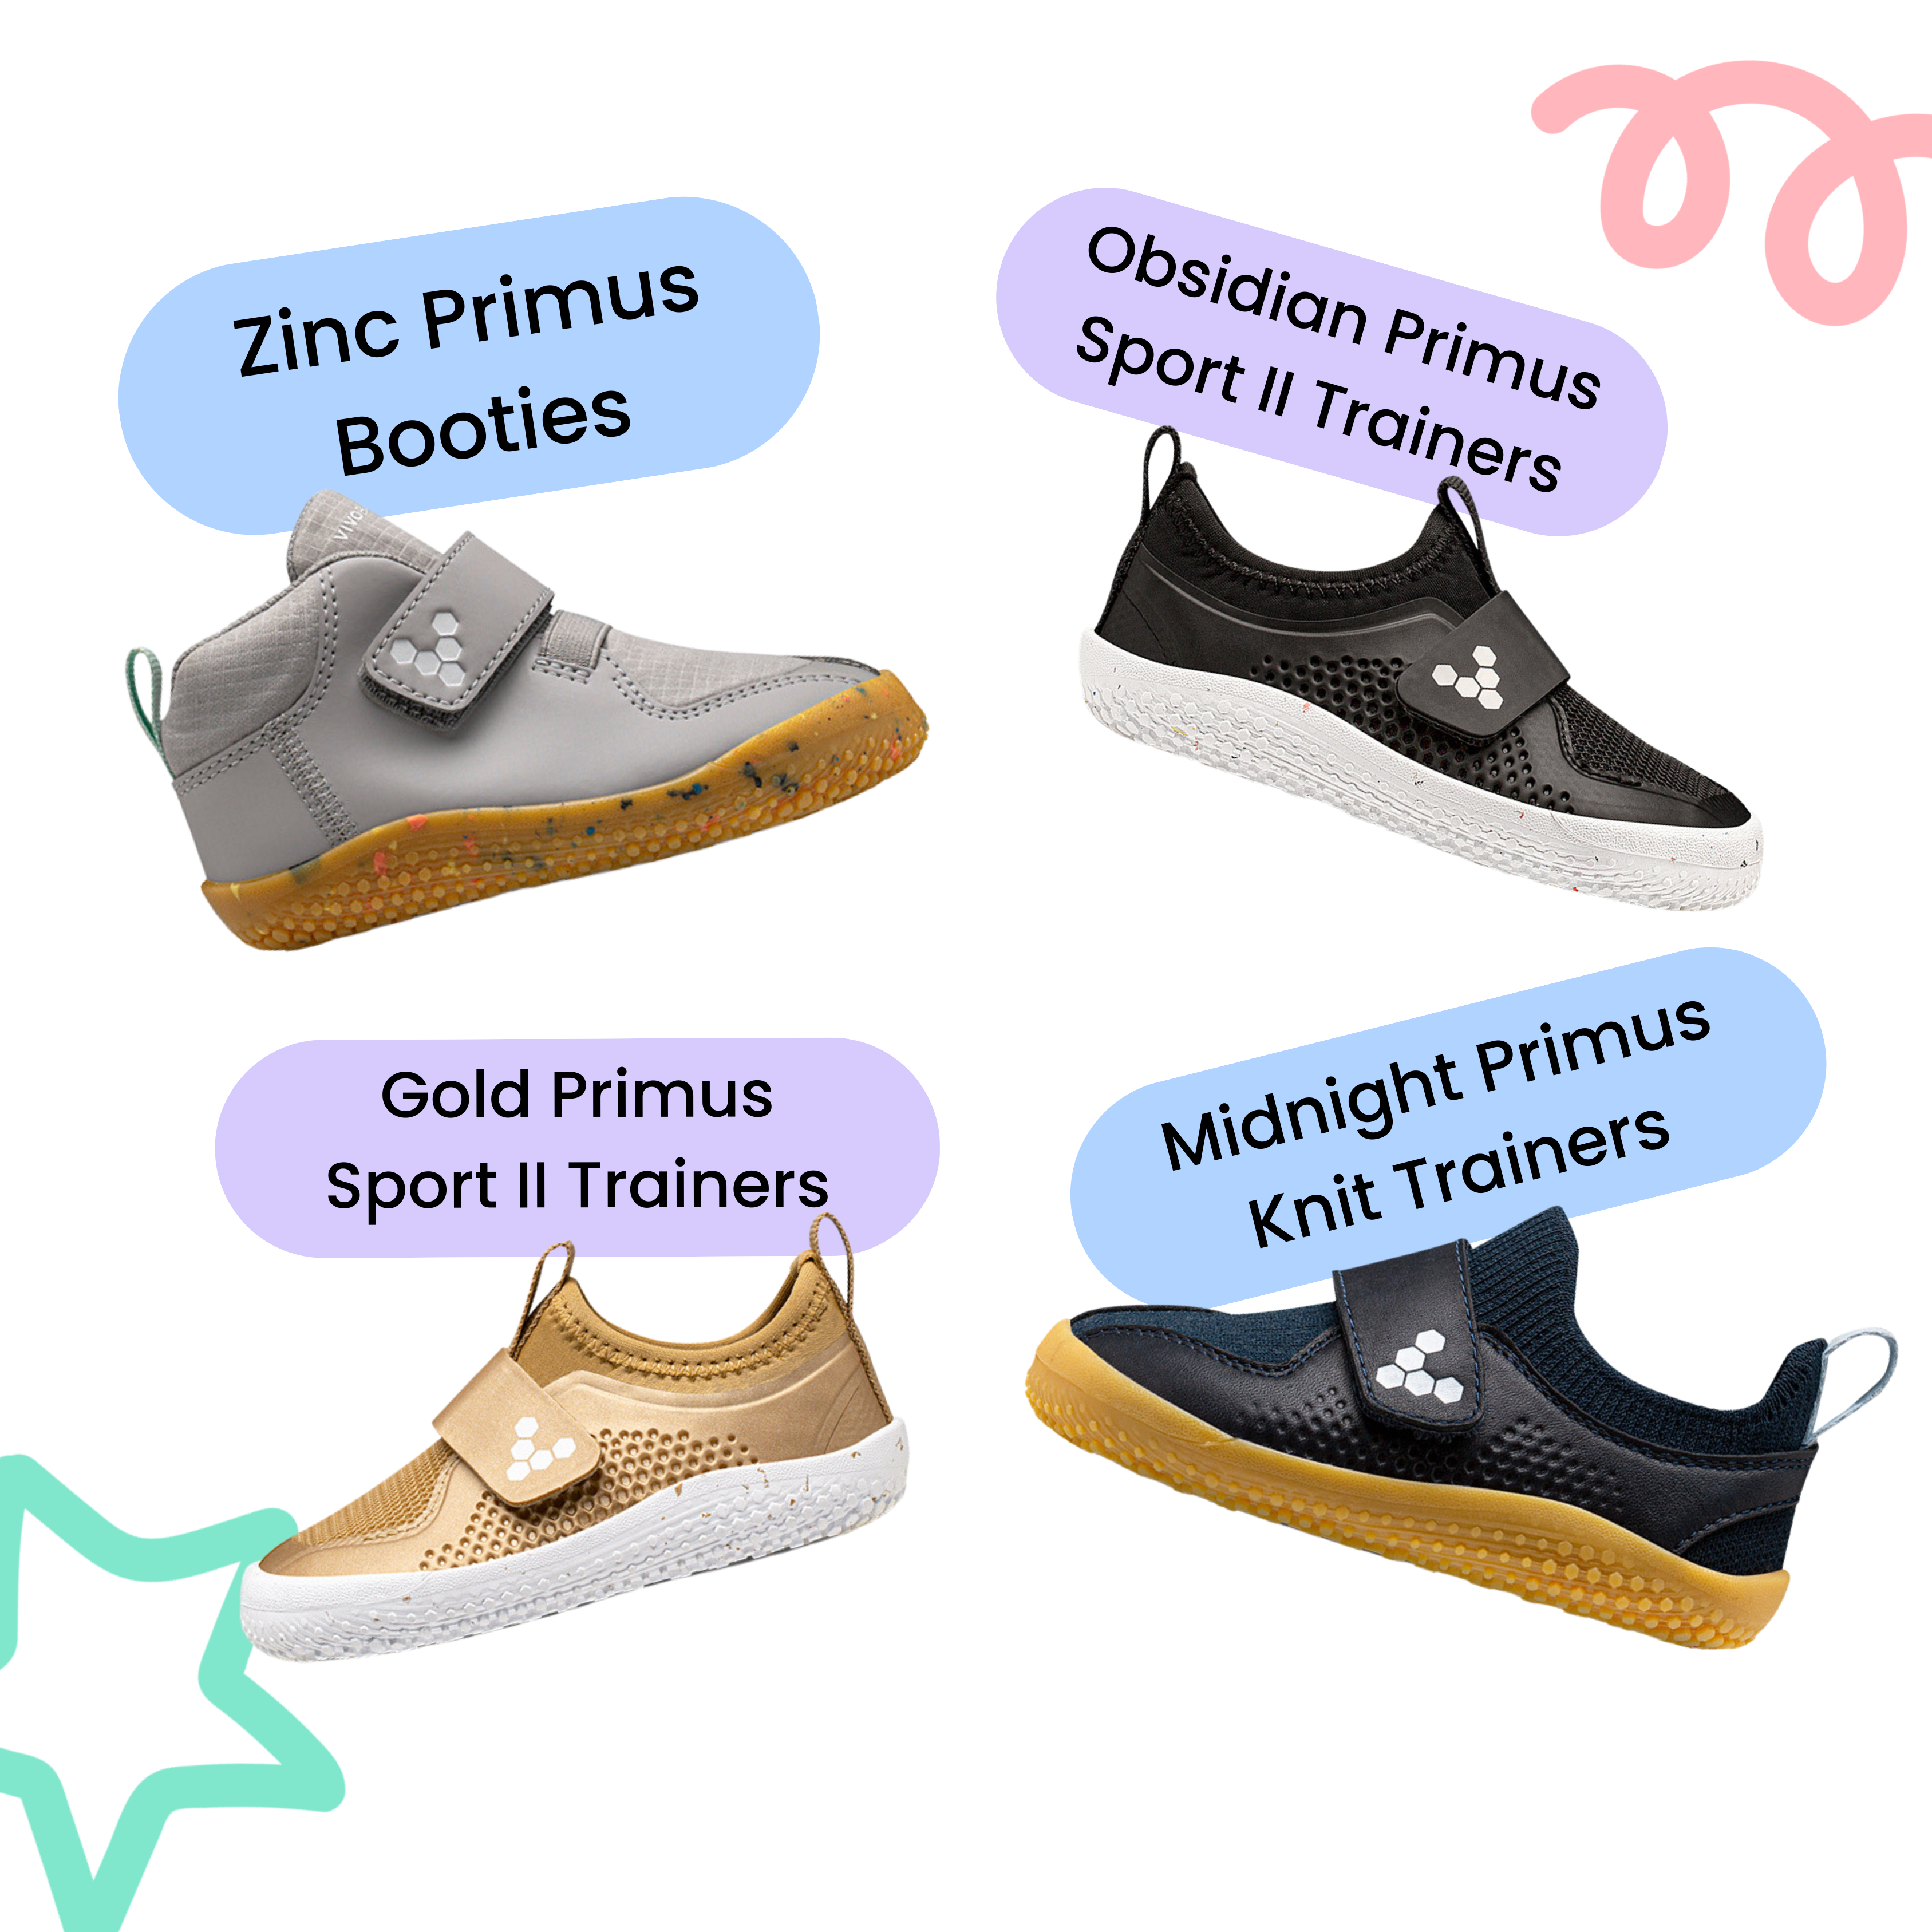 Bundlee, rented baby shoes - Vivobarefoot Zinc Primus Booties, Vivobarefoot Obsidian Primus Sport II Trainers, Vivobarefoot Gold Primus Sport II Trainers, Midnight Primus Knit Trainers